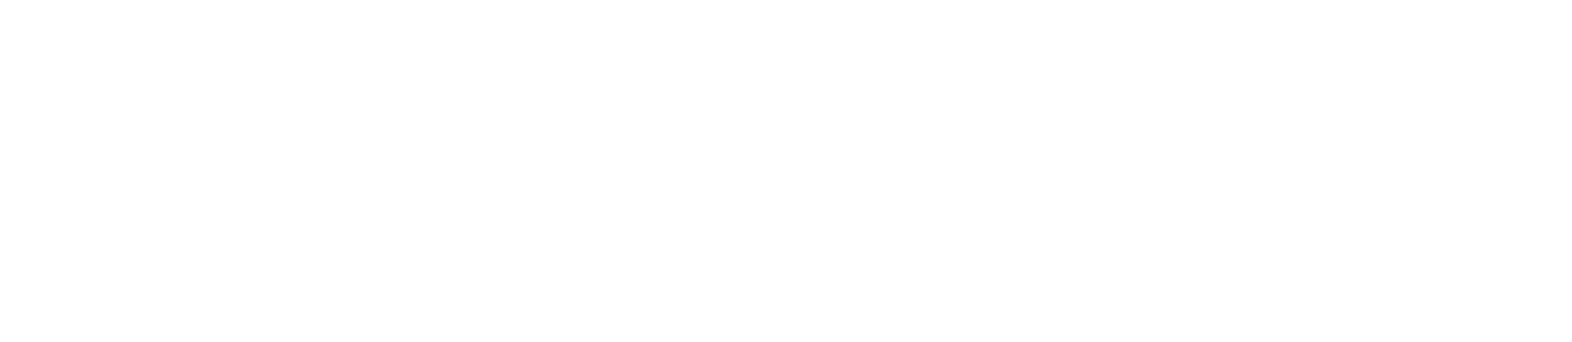 Nanobiotix logo grand pour les fonds sombres (PNG transparent)